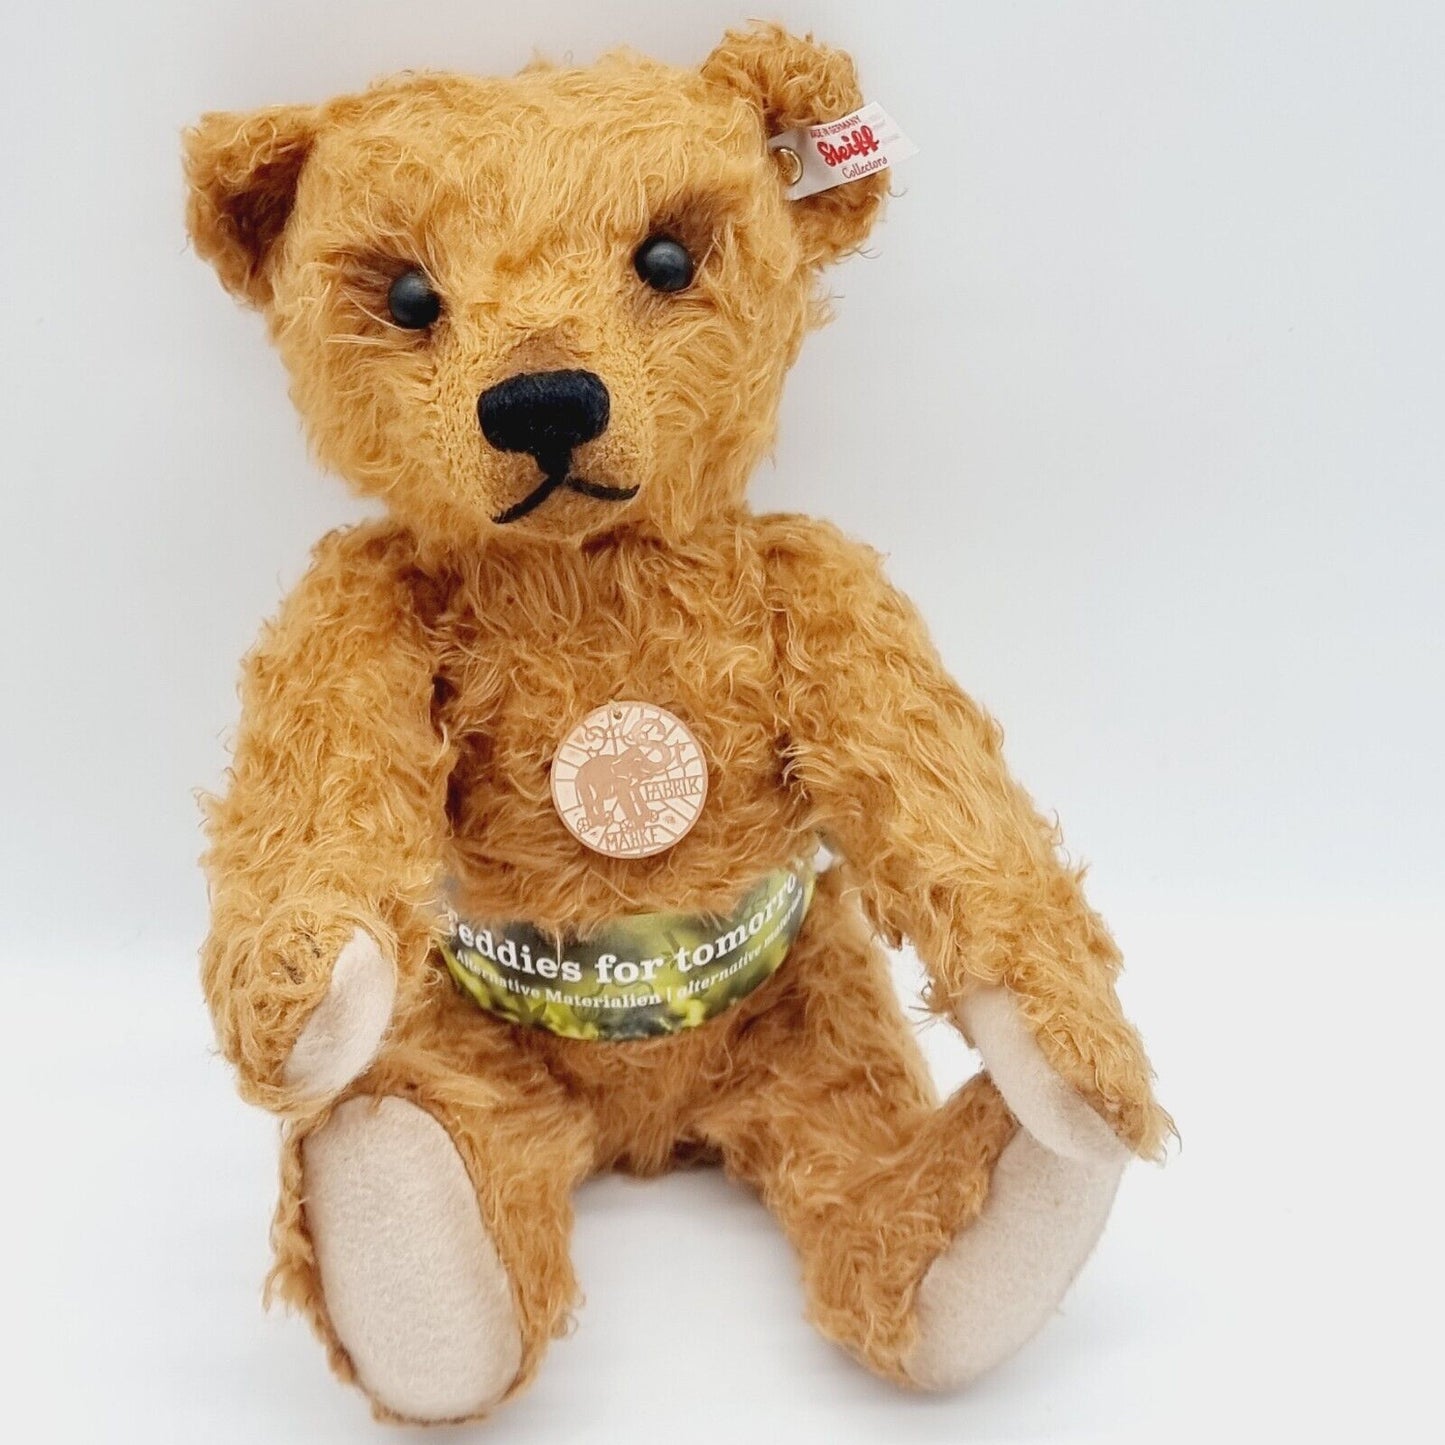 Steiff Teddybär Linus 006104 Teddies for tomorrow 35 cm limitiert 2020 Sammler